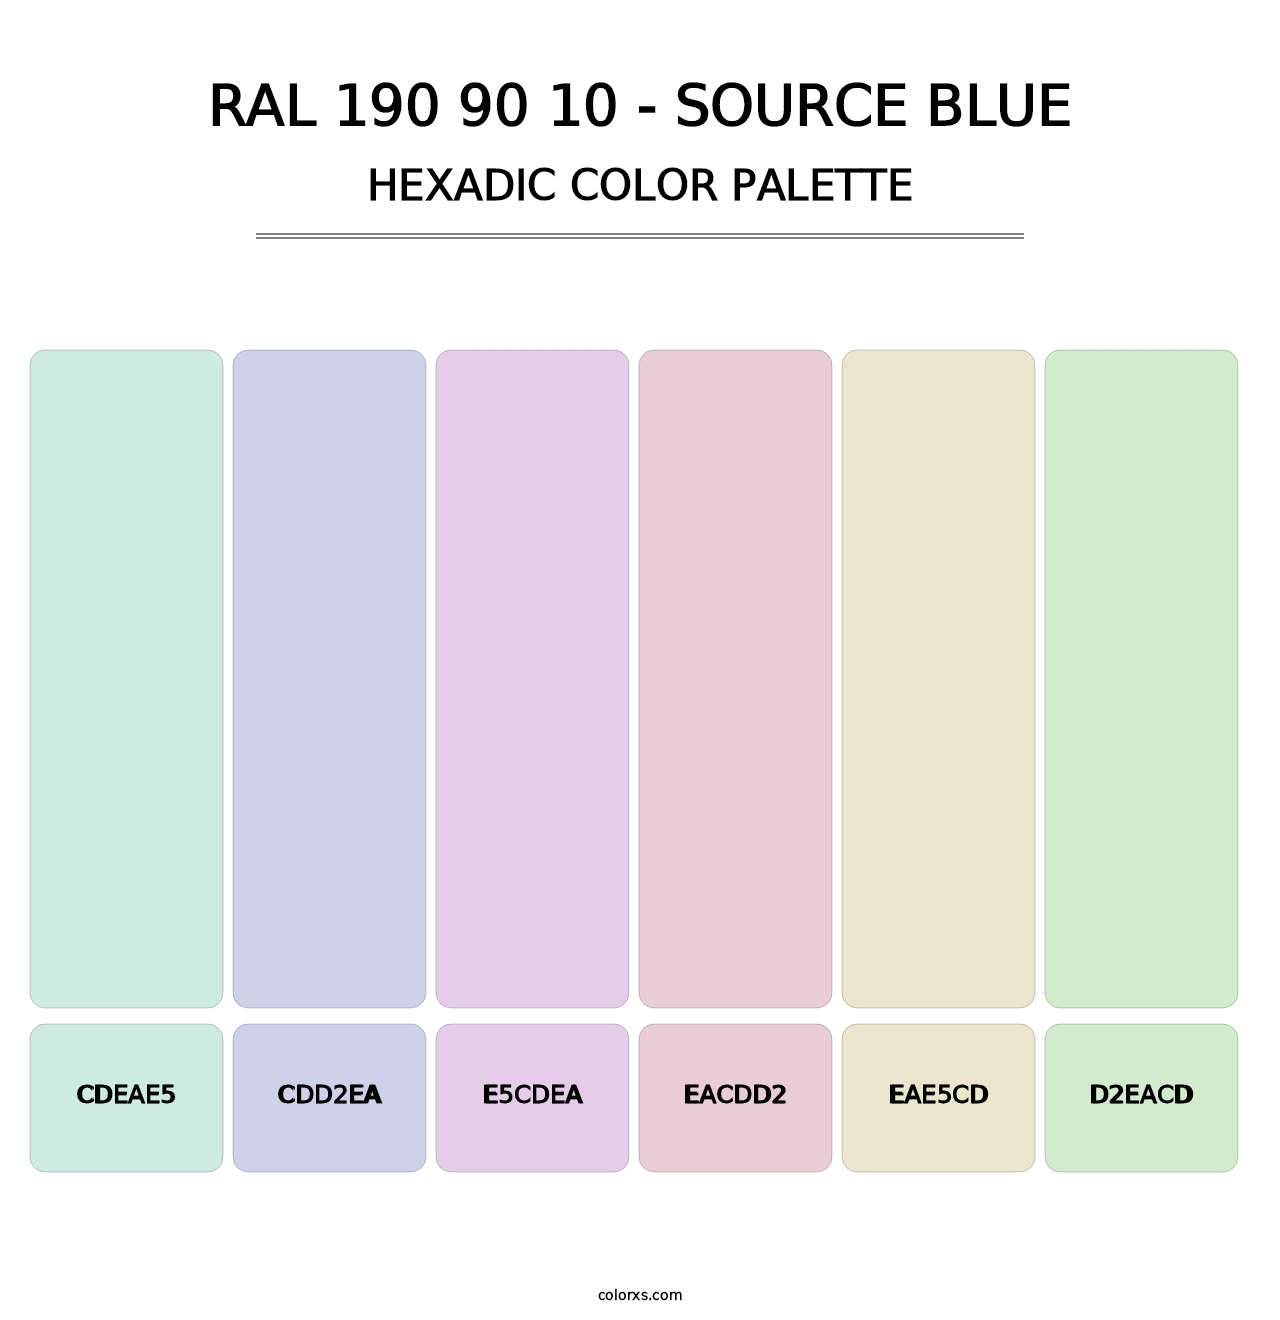 RAL 190 90 10 - Source Blue - Hexadic Color Palette